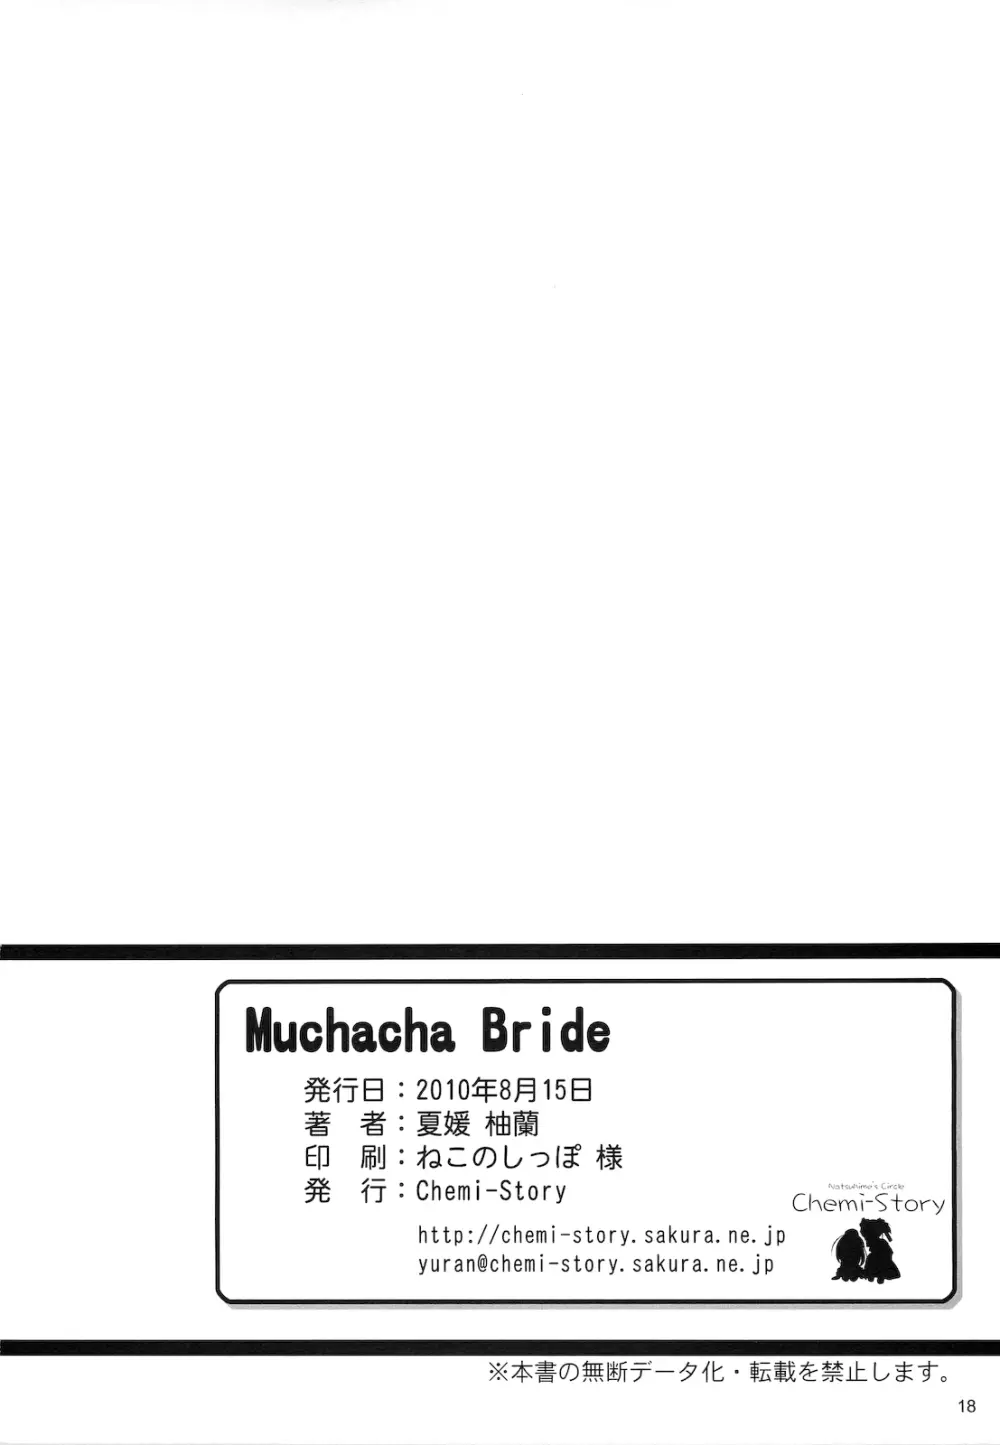 Muchacha Bride - page17